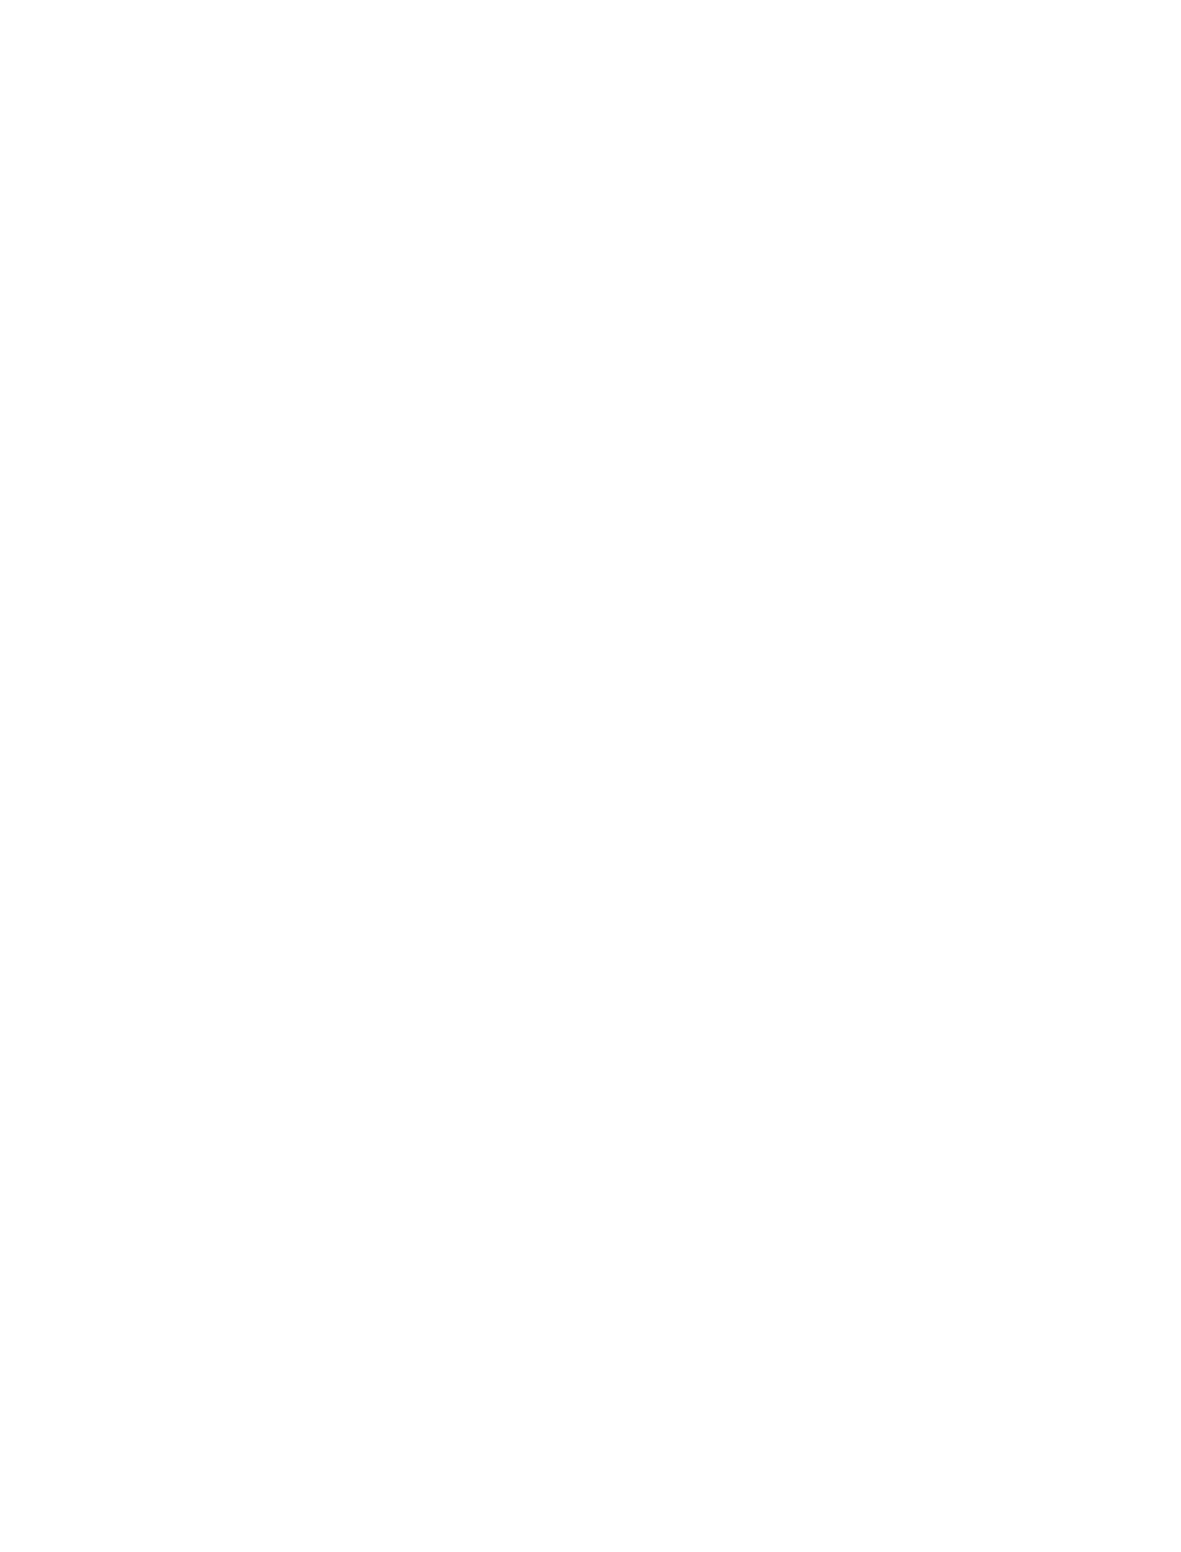 Sagax logo pour fonds sombres (PNG transparent)